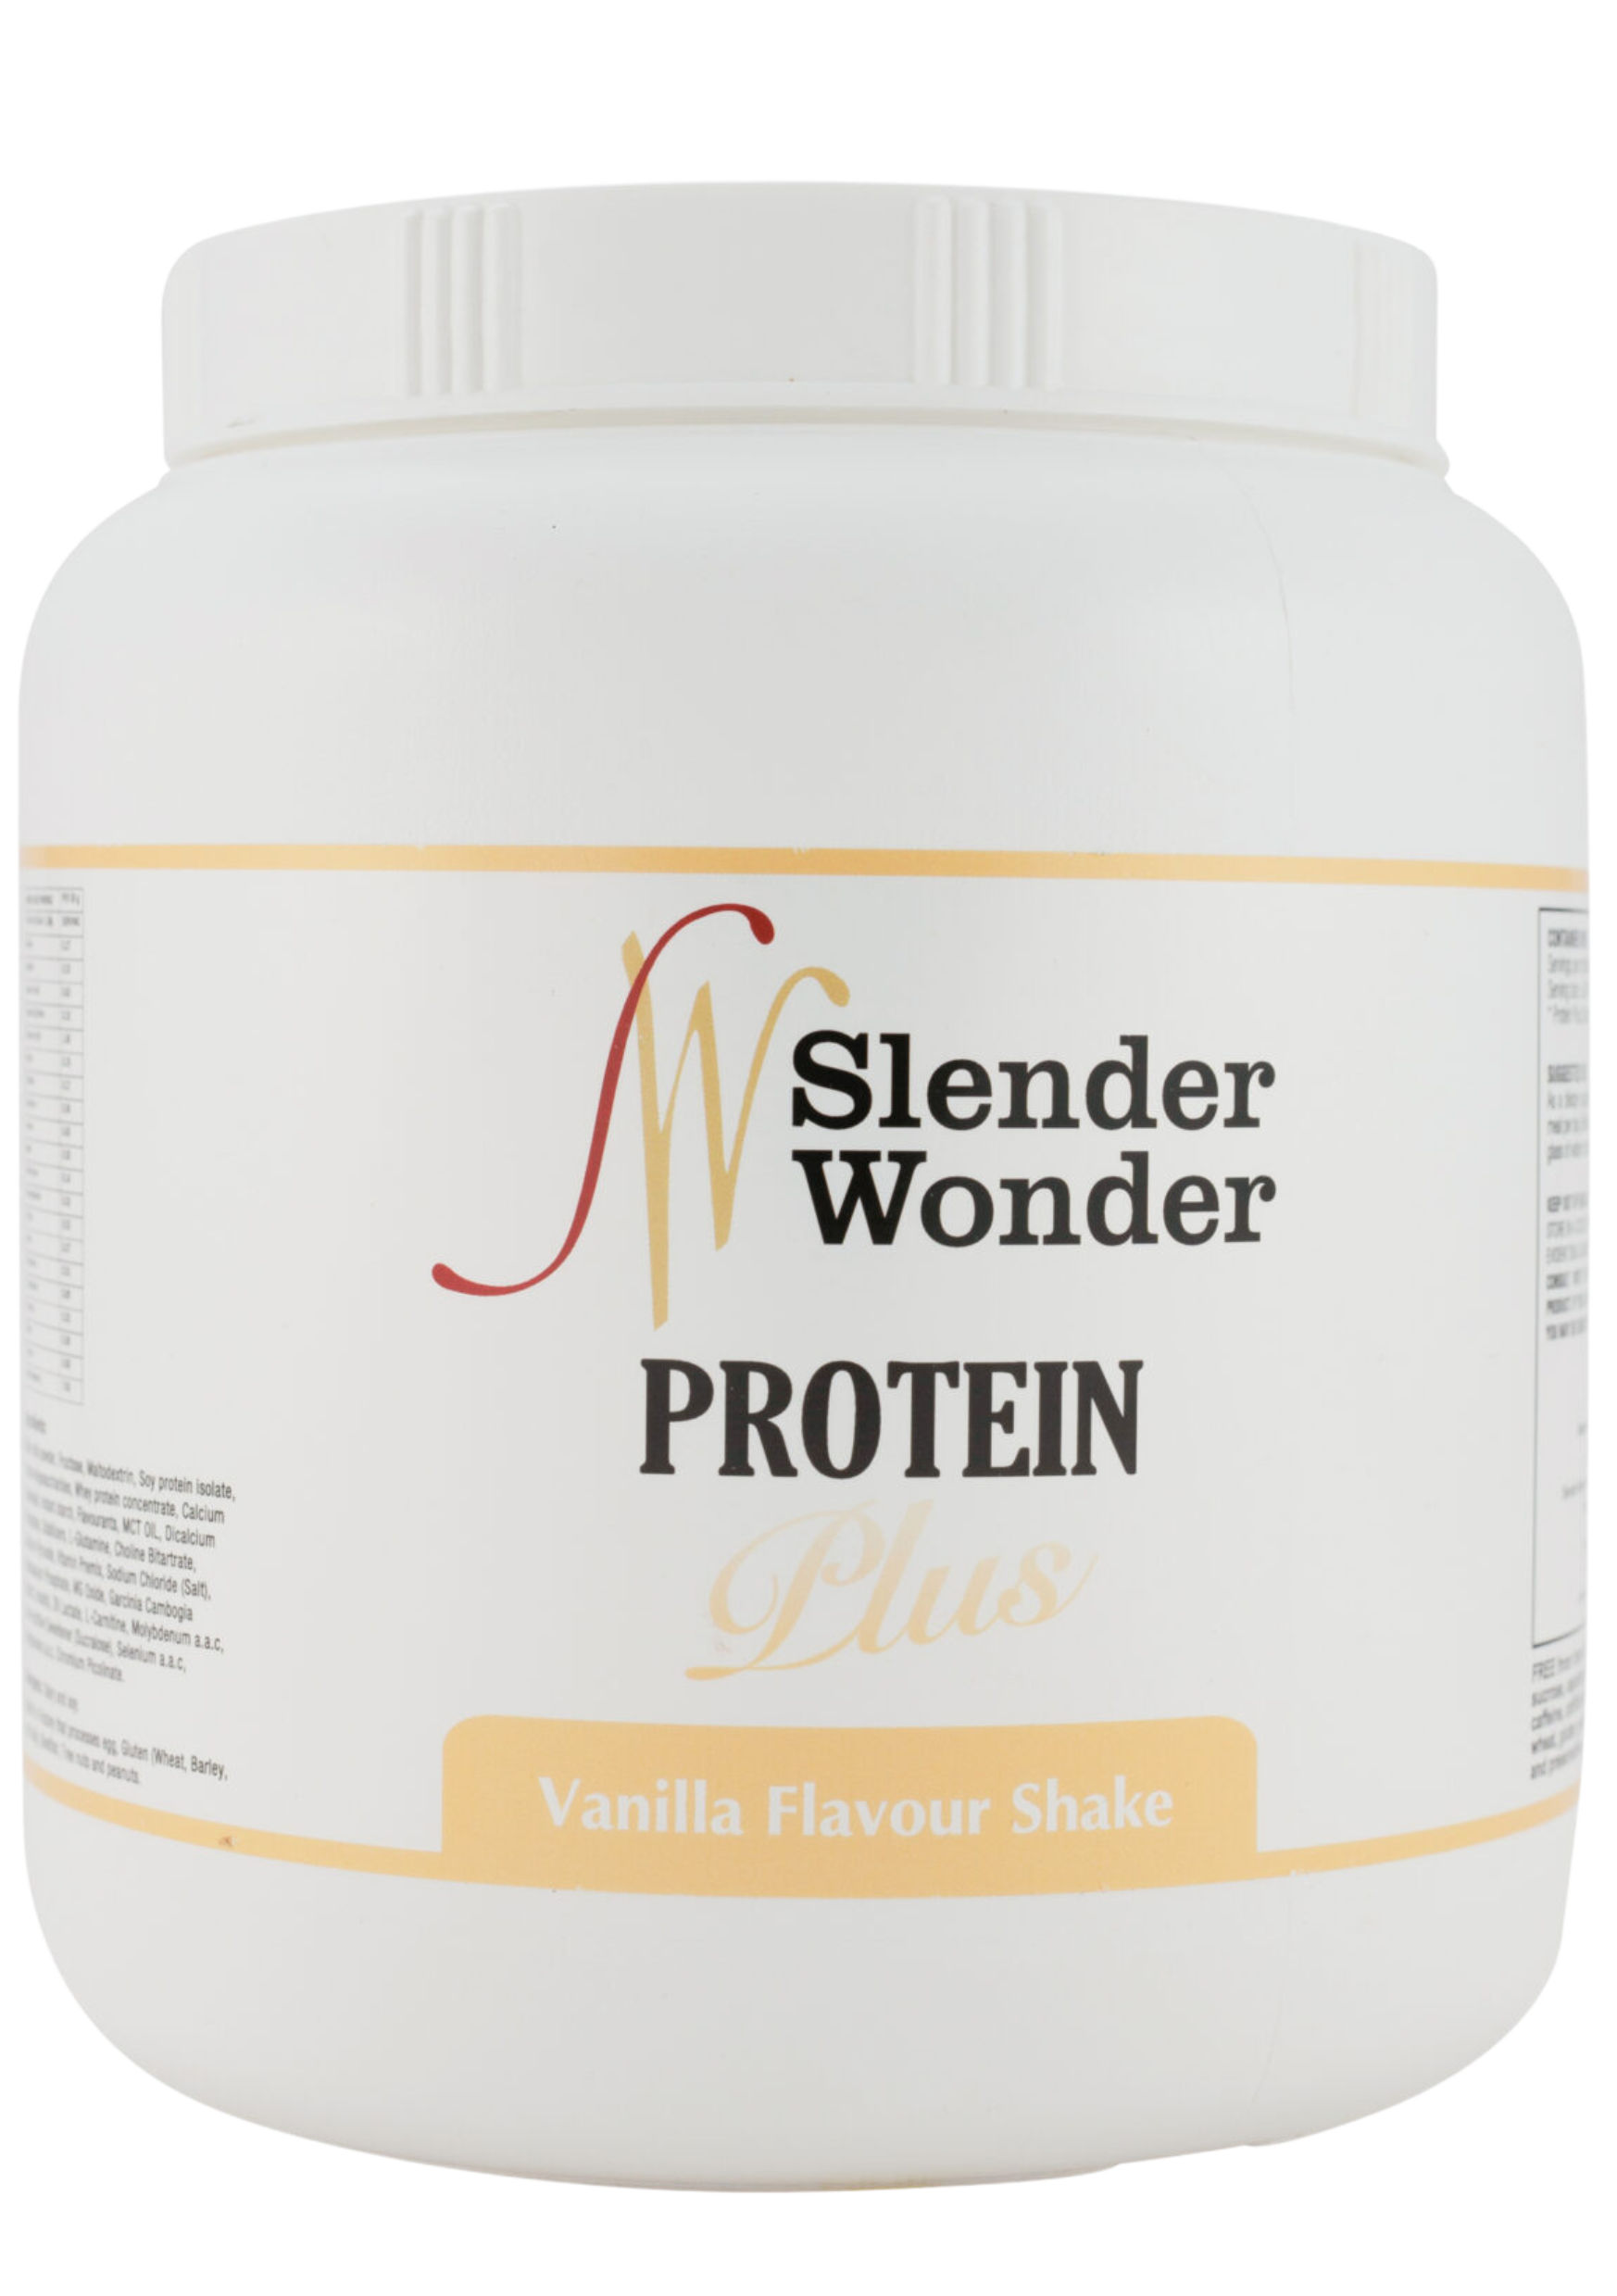 Slender Wonder Protein Plus Shake